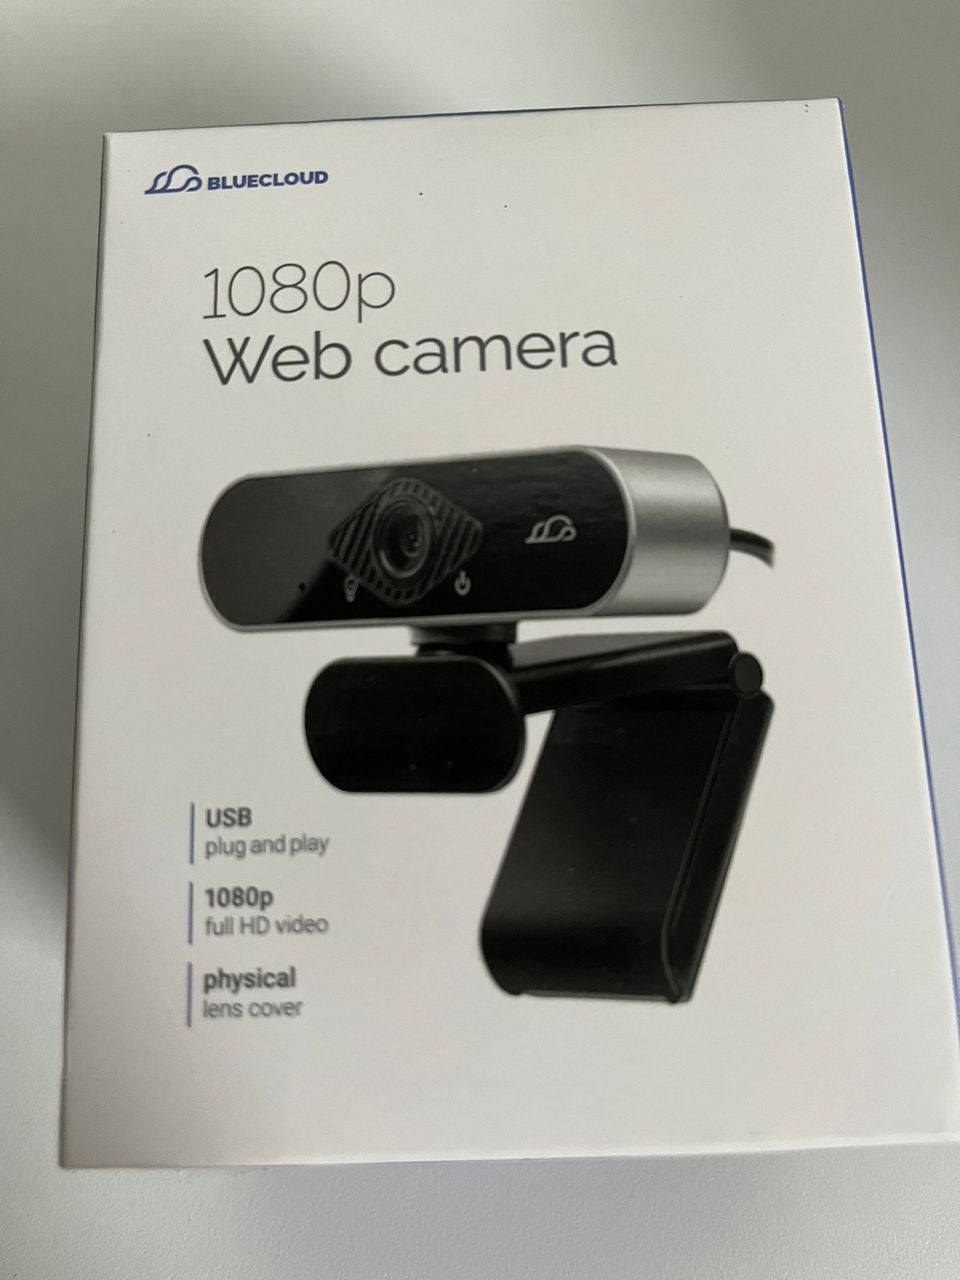 Bluecloud 1080p web camera